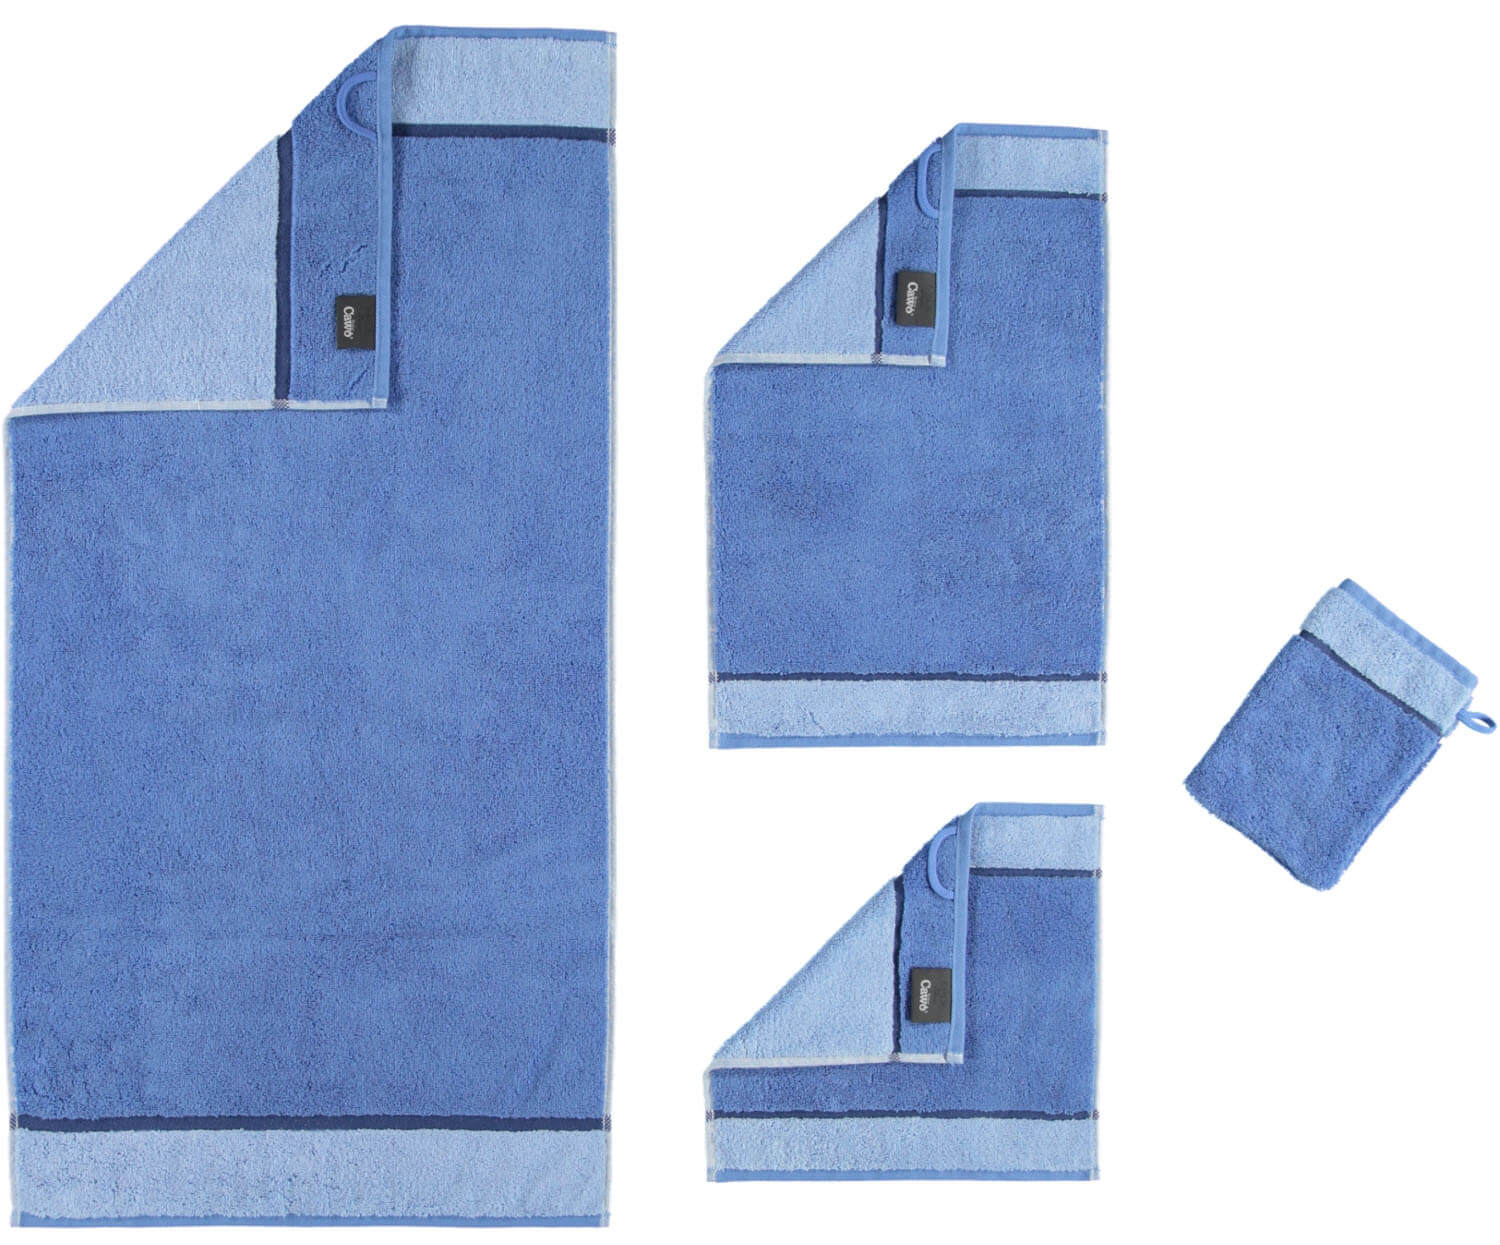 Махровое полотенце Riva Doubleface Blau